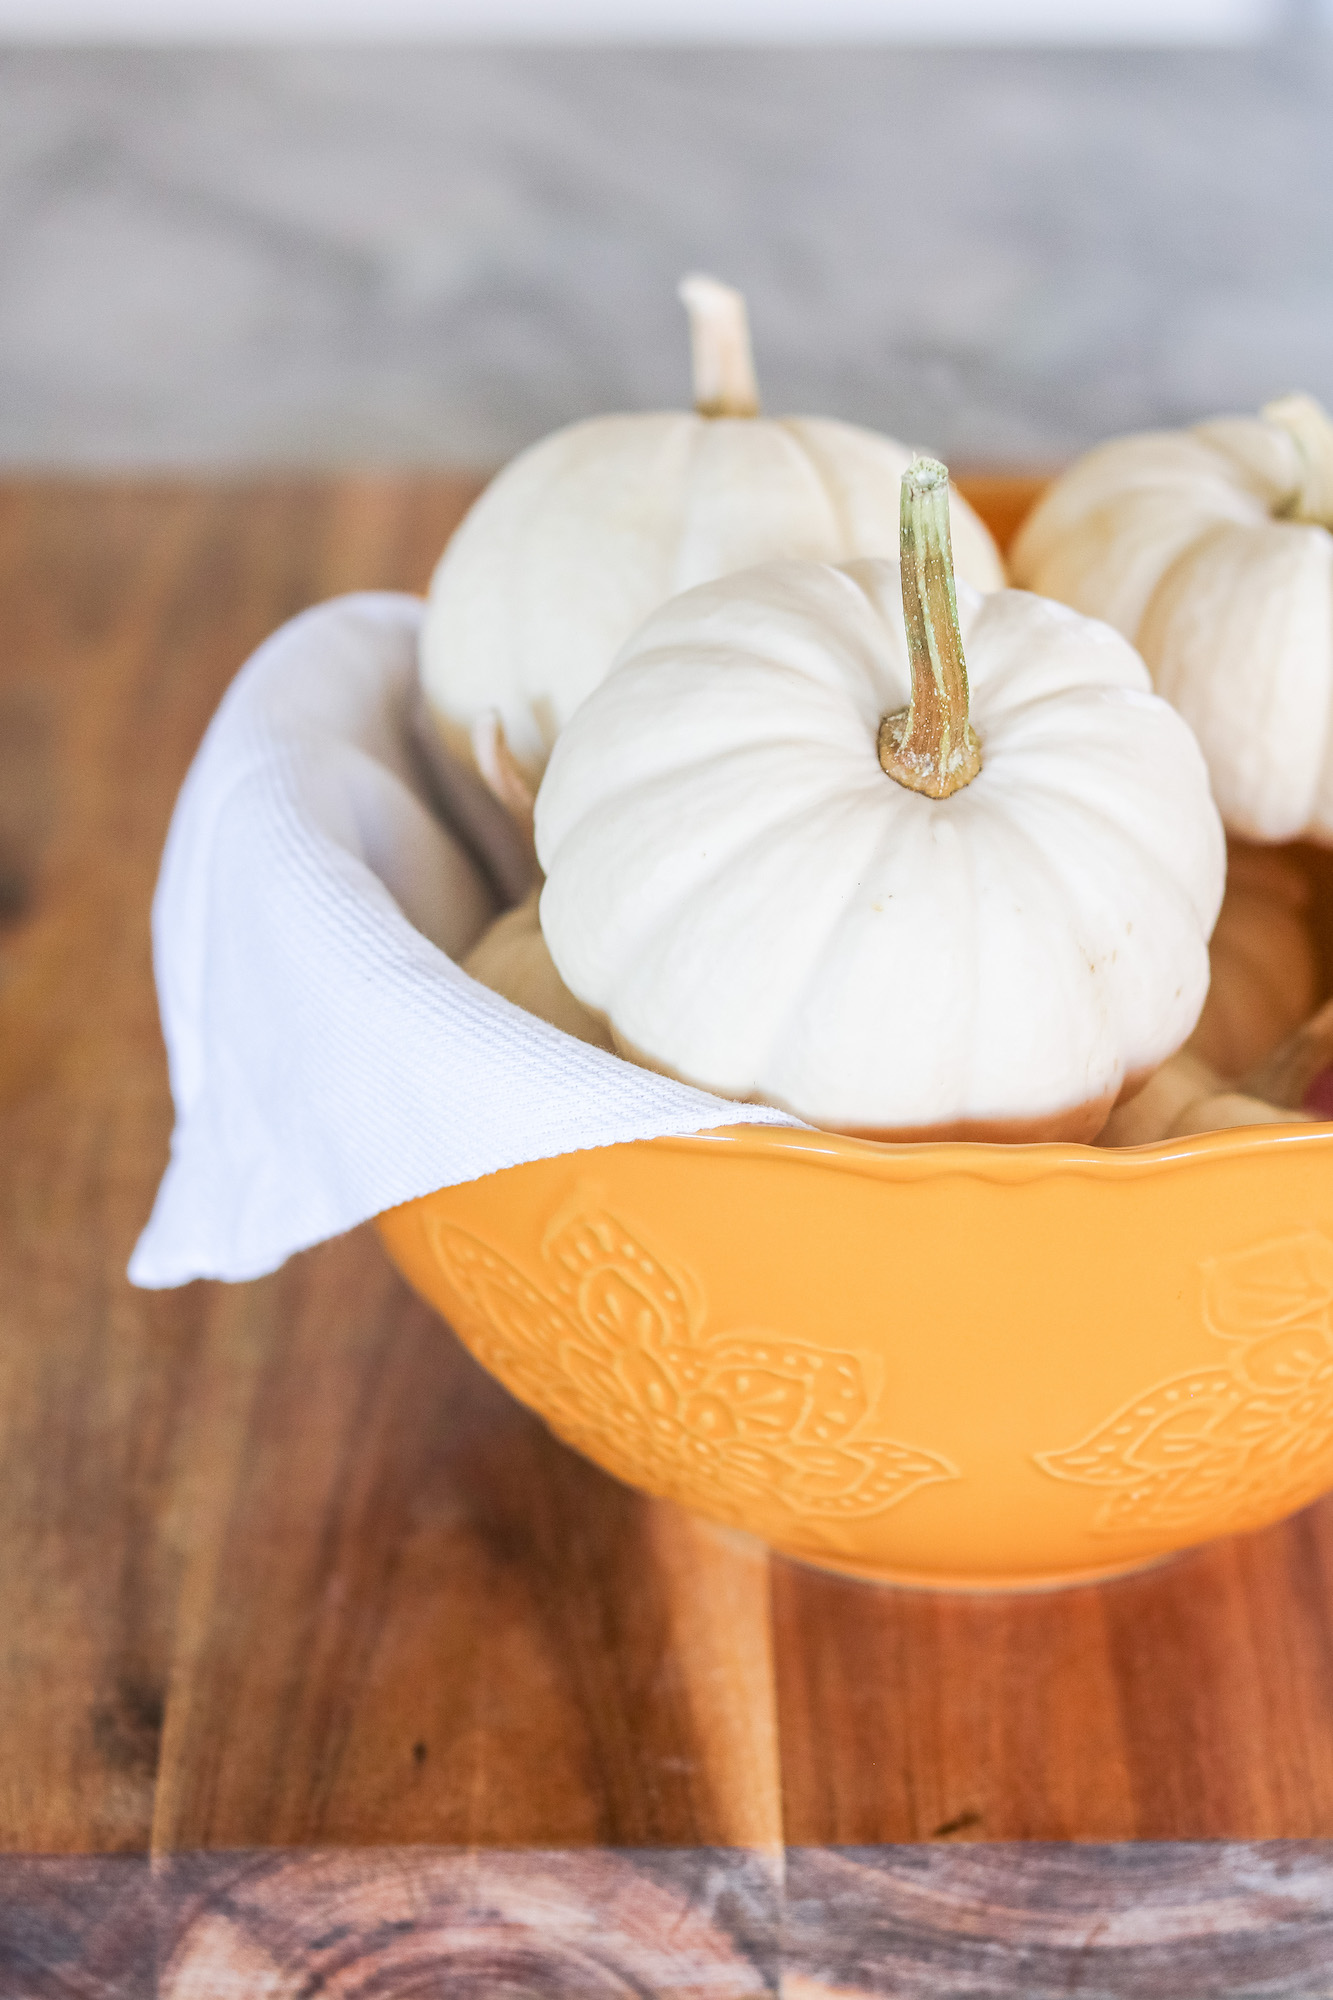 Fall kitchen essentials - ceramic bowls